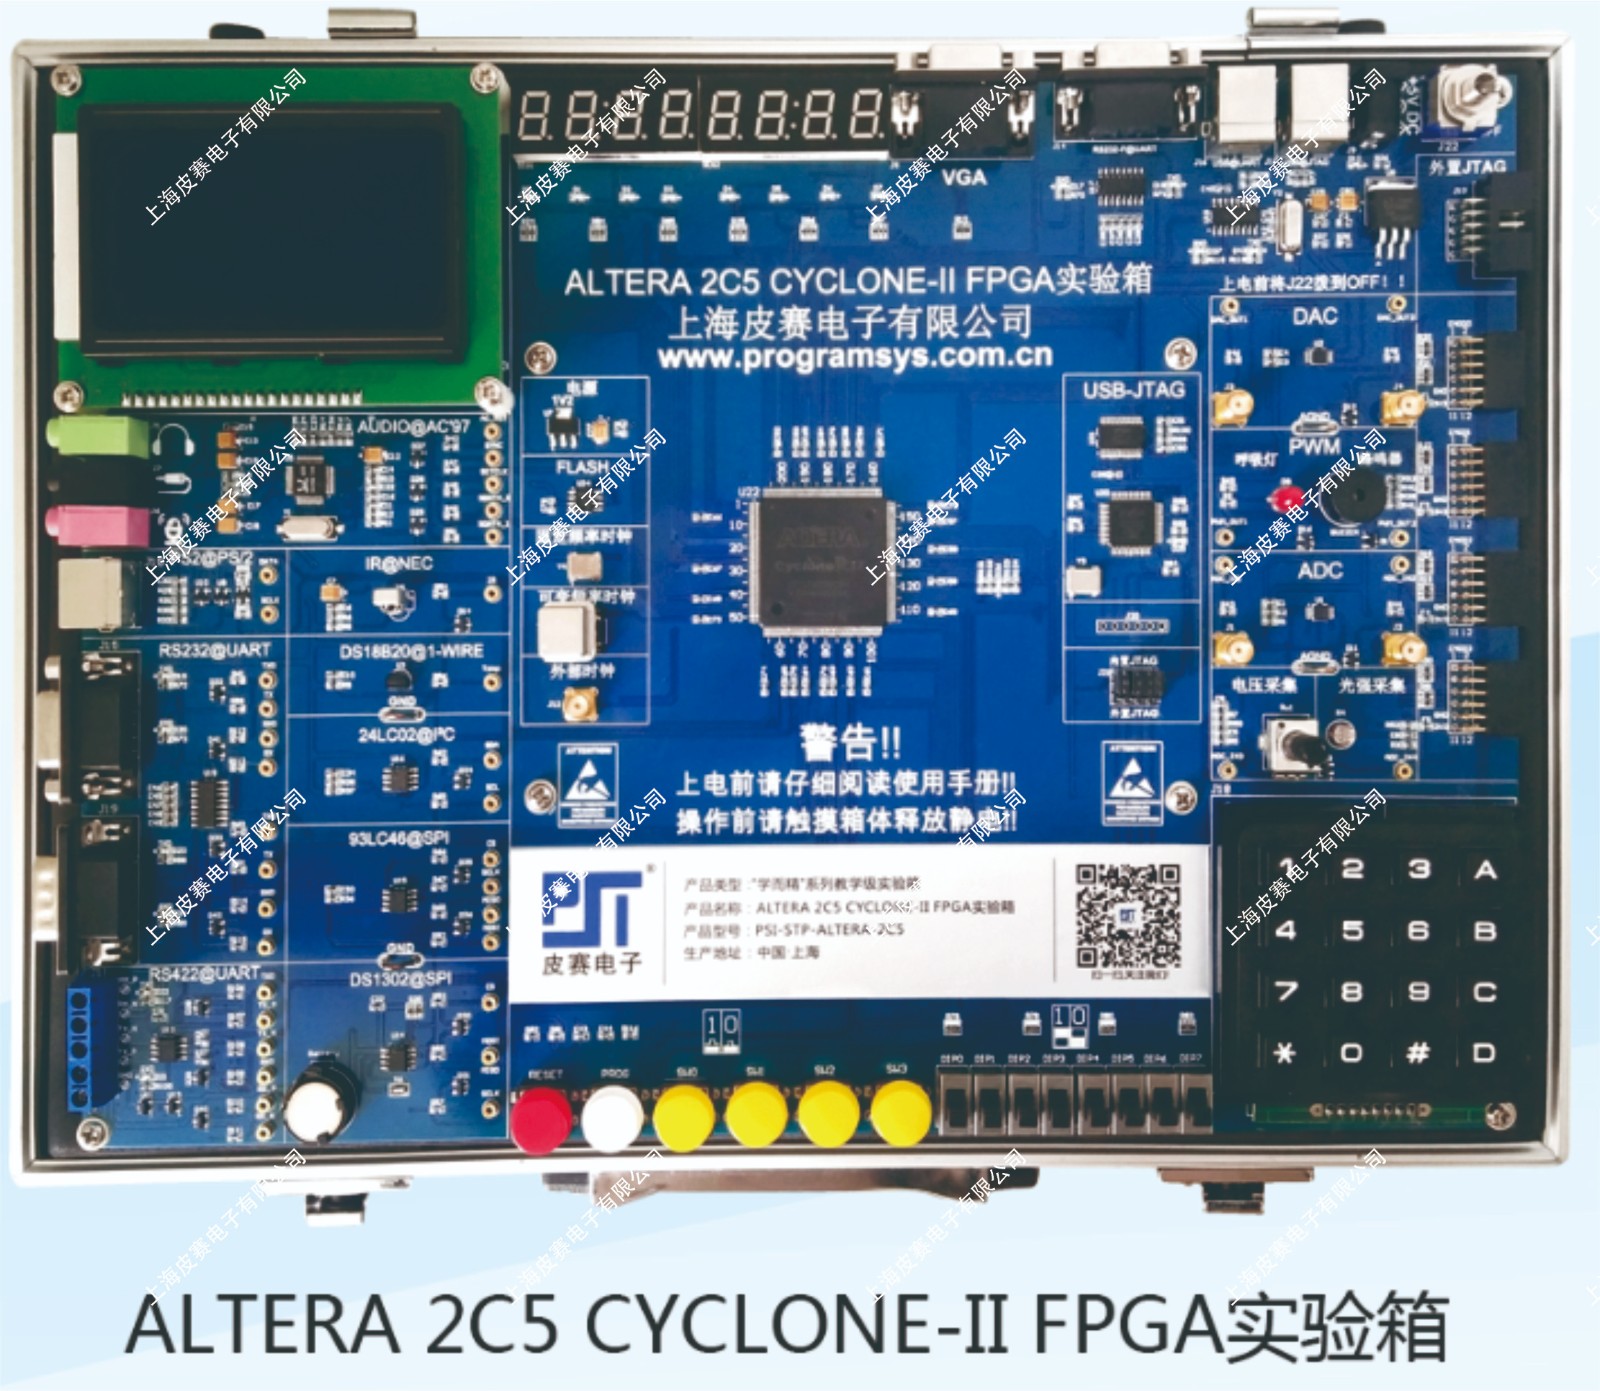 ALTERA 2C5 CYCLONE-II FPGA实验箱